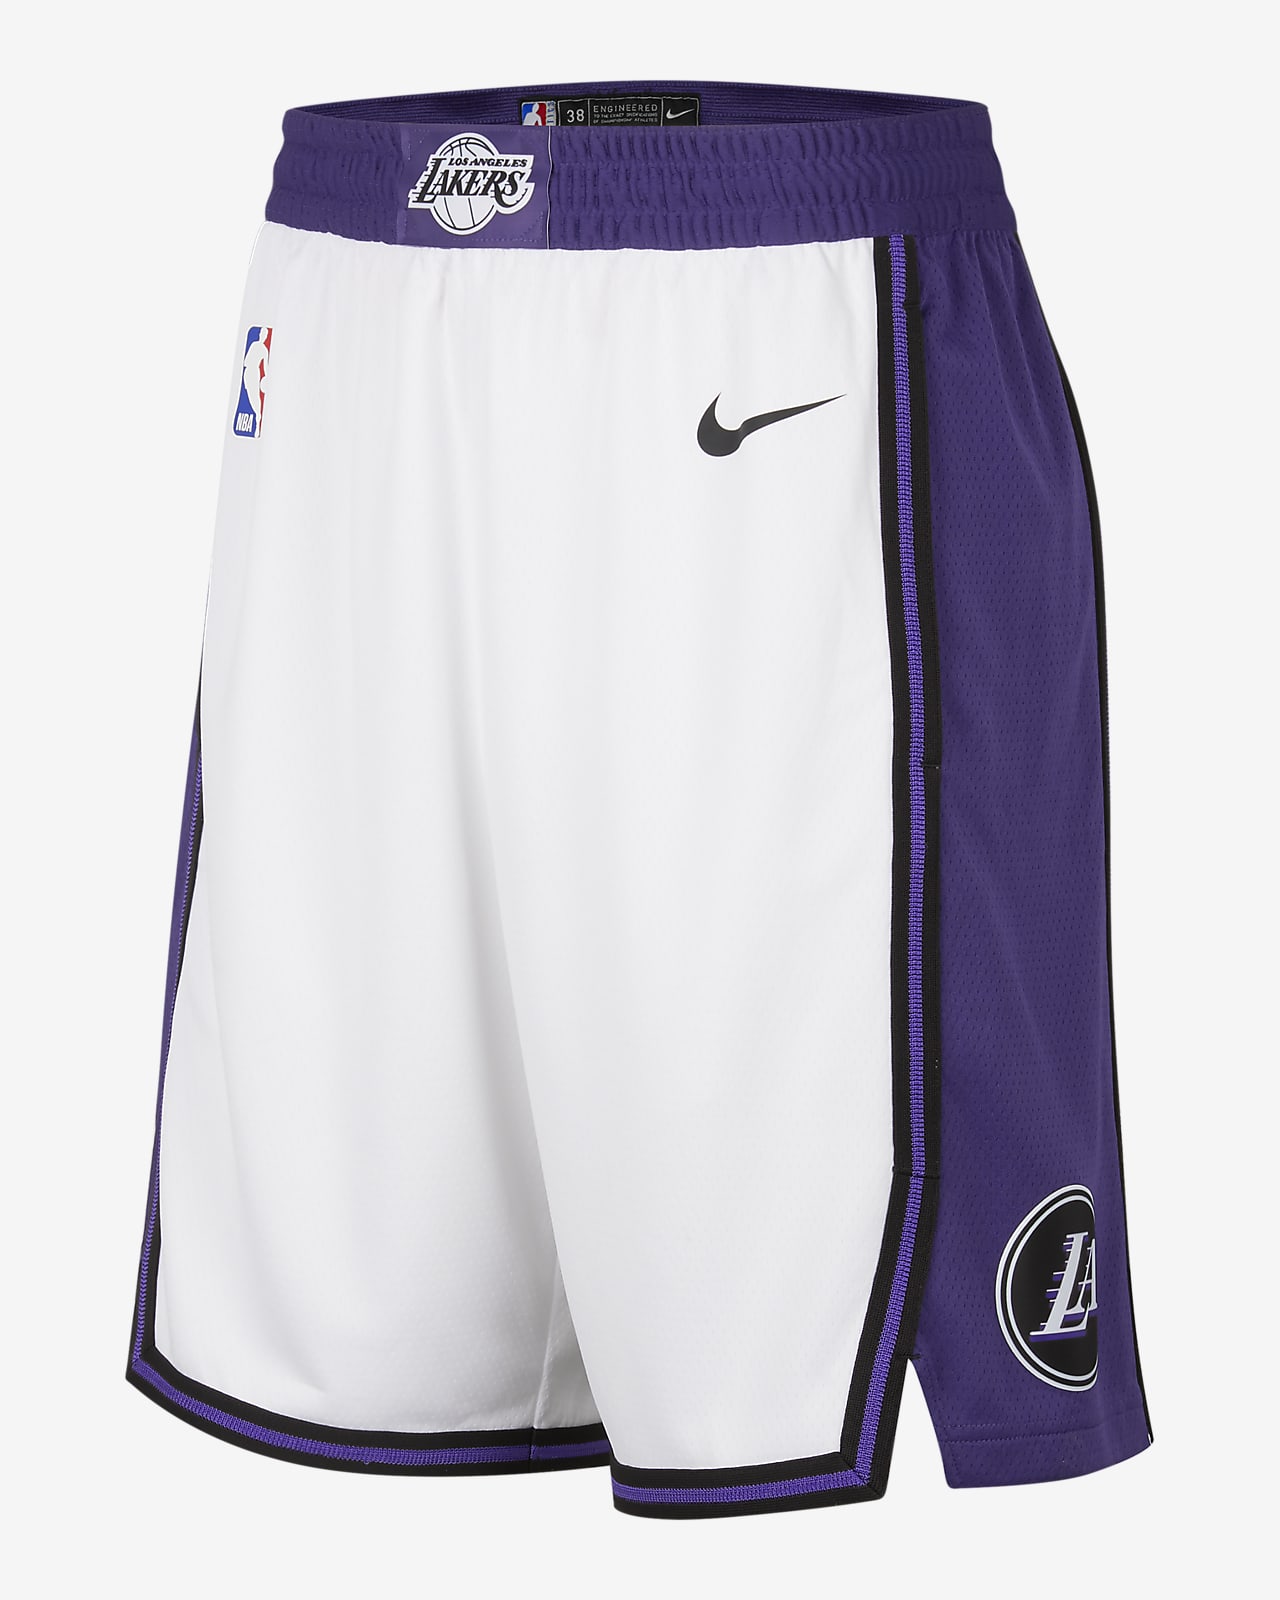 Shorts Nike Swingman para hombre Los Angeles Lakers Edition.